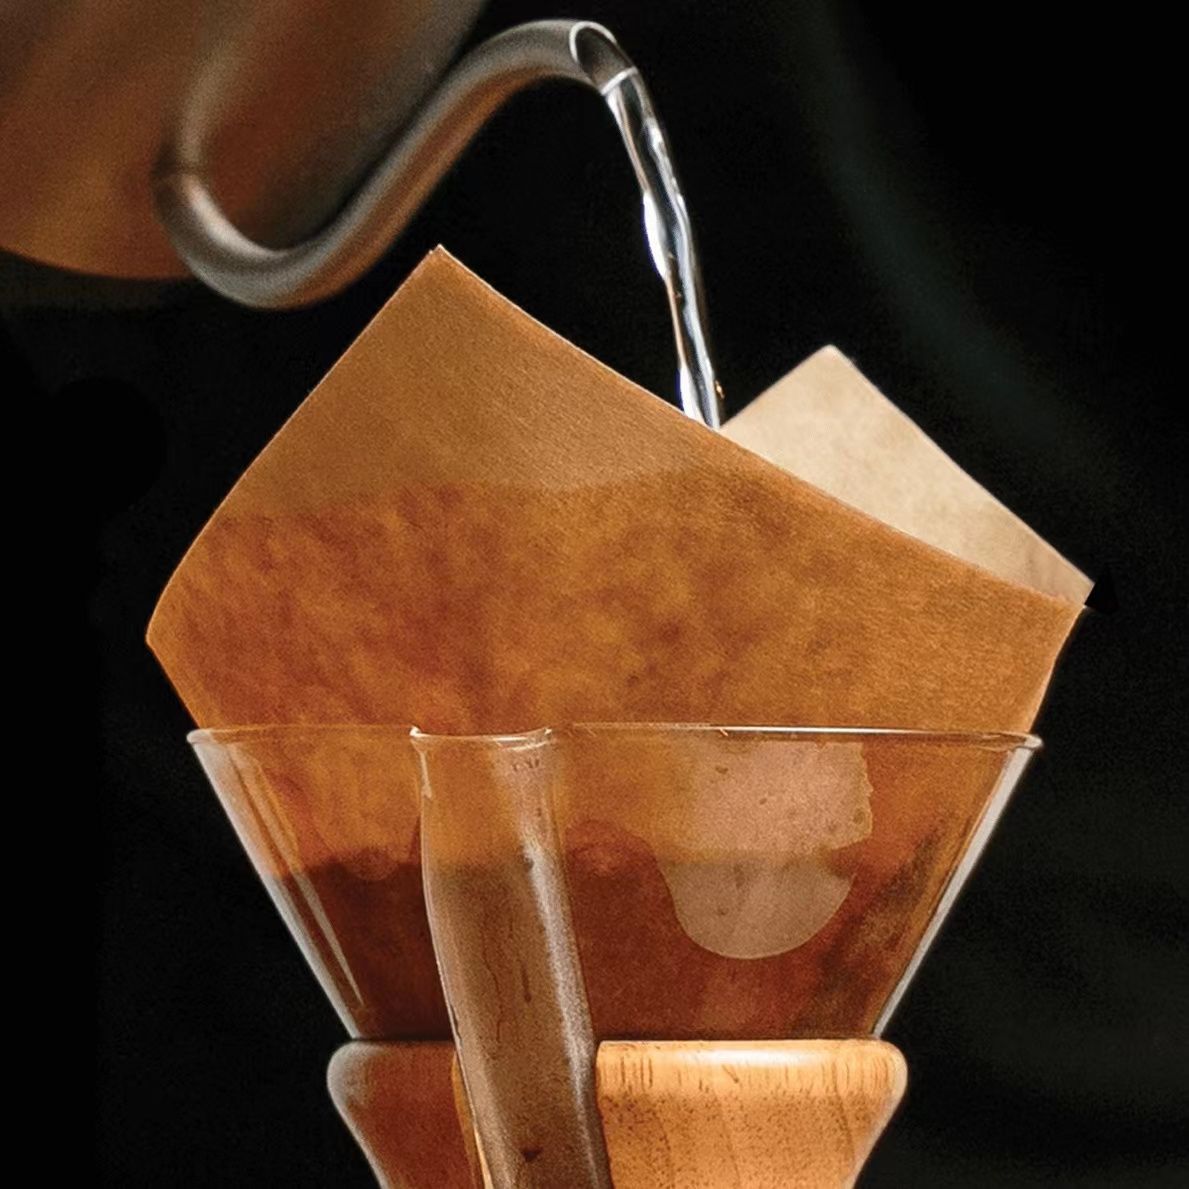 Chemex Unbleached Coffee Filter Squares - FSU-100 (100-Pack)